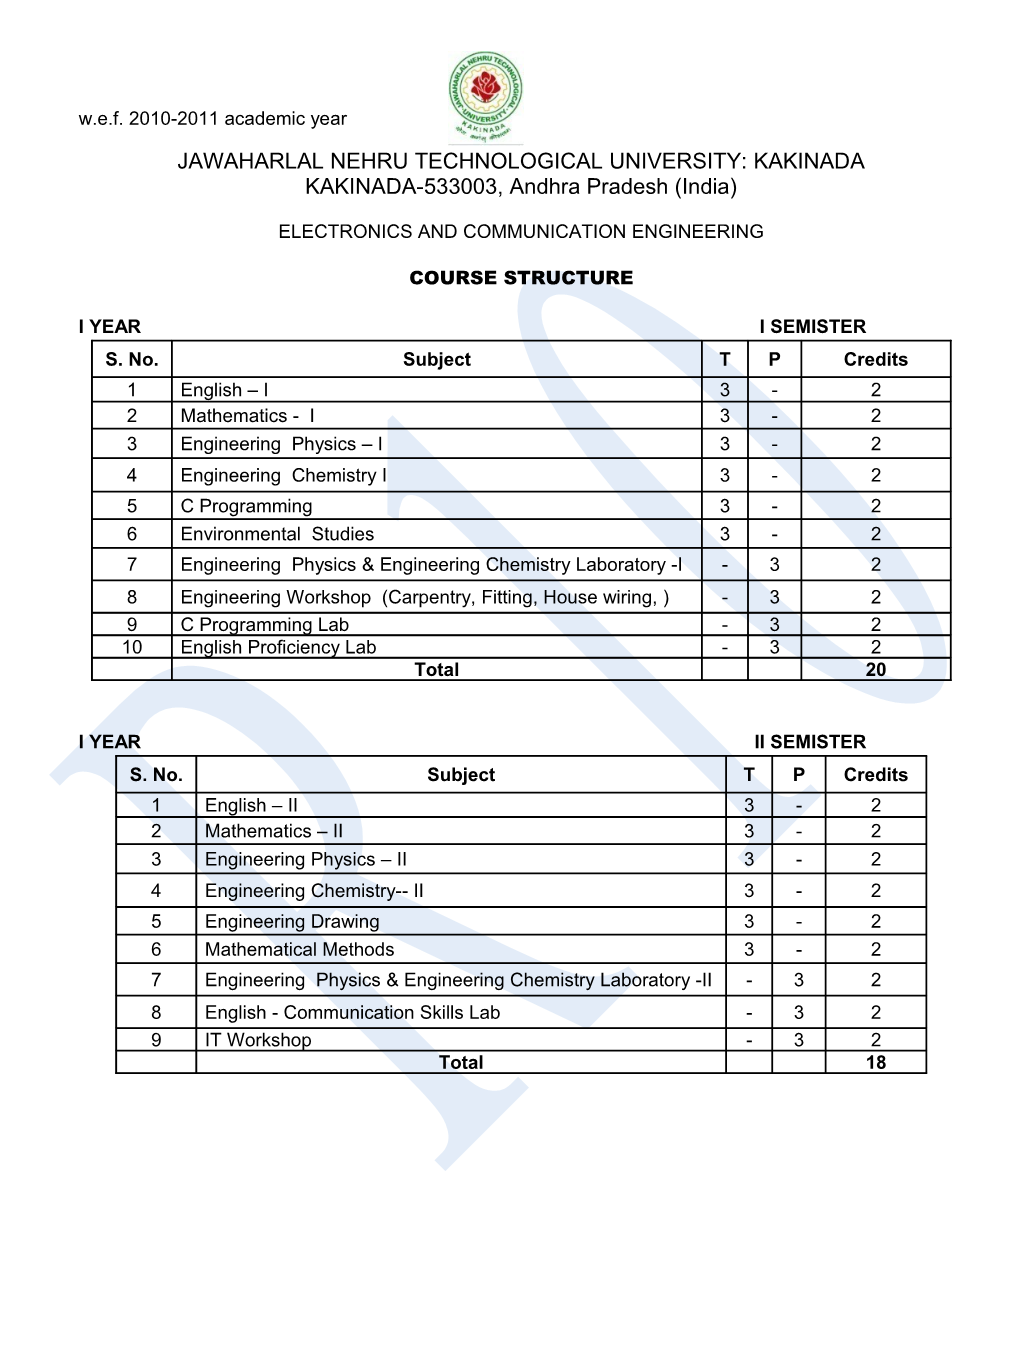 Jawaharlal Nehru Technological University: Kakinada s5